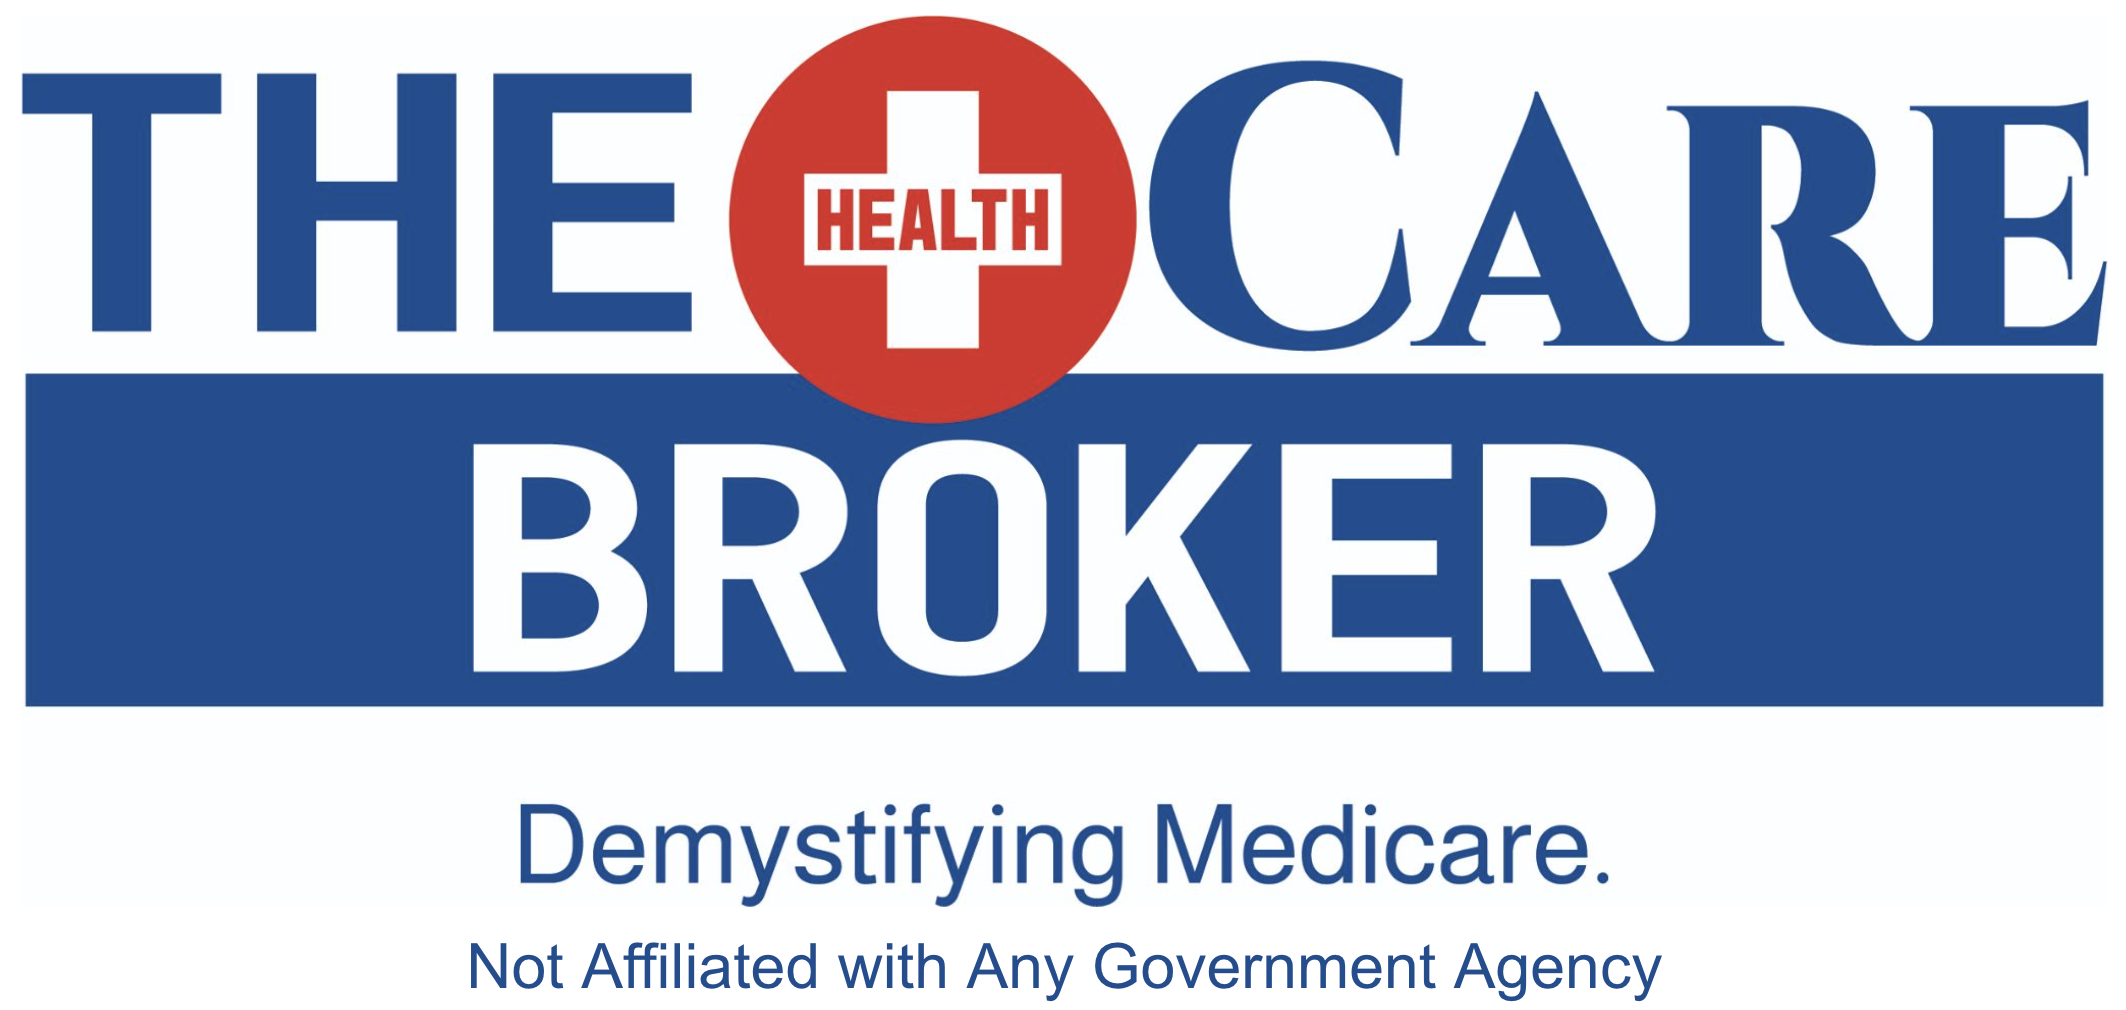 The Healt Care Broker